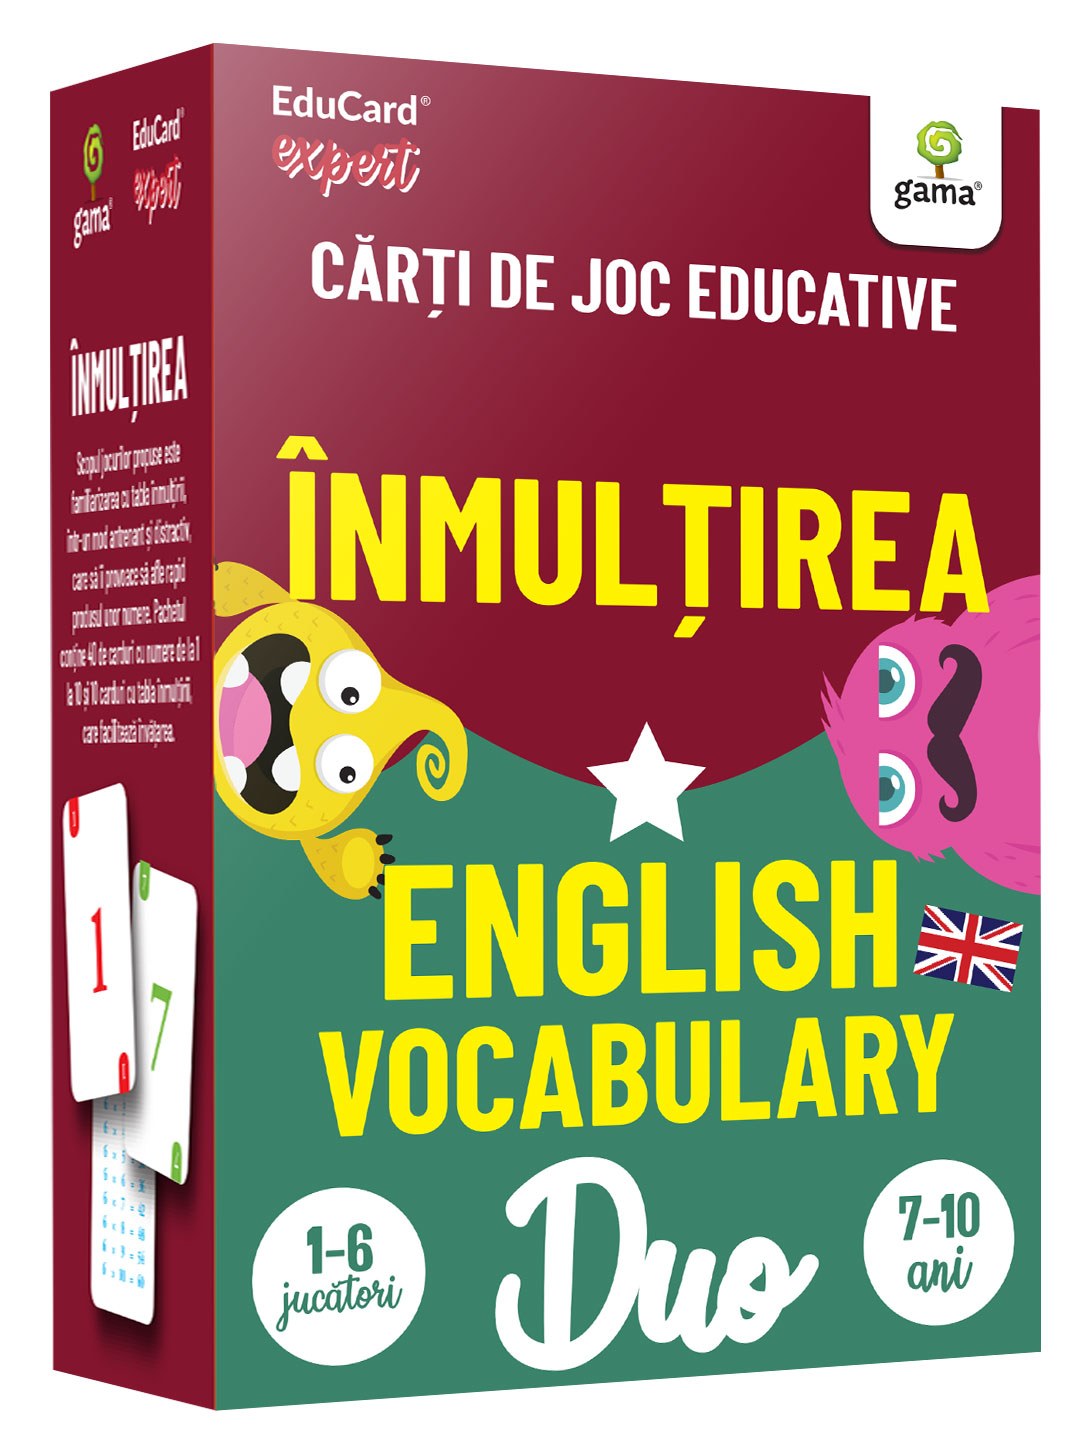 DuoCard - Inmultirea English vocabulary